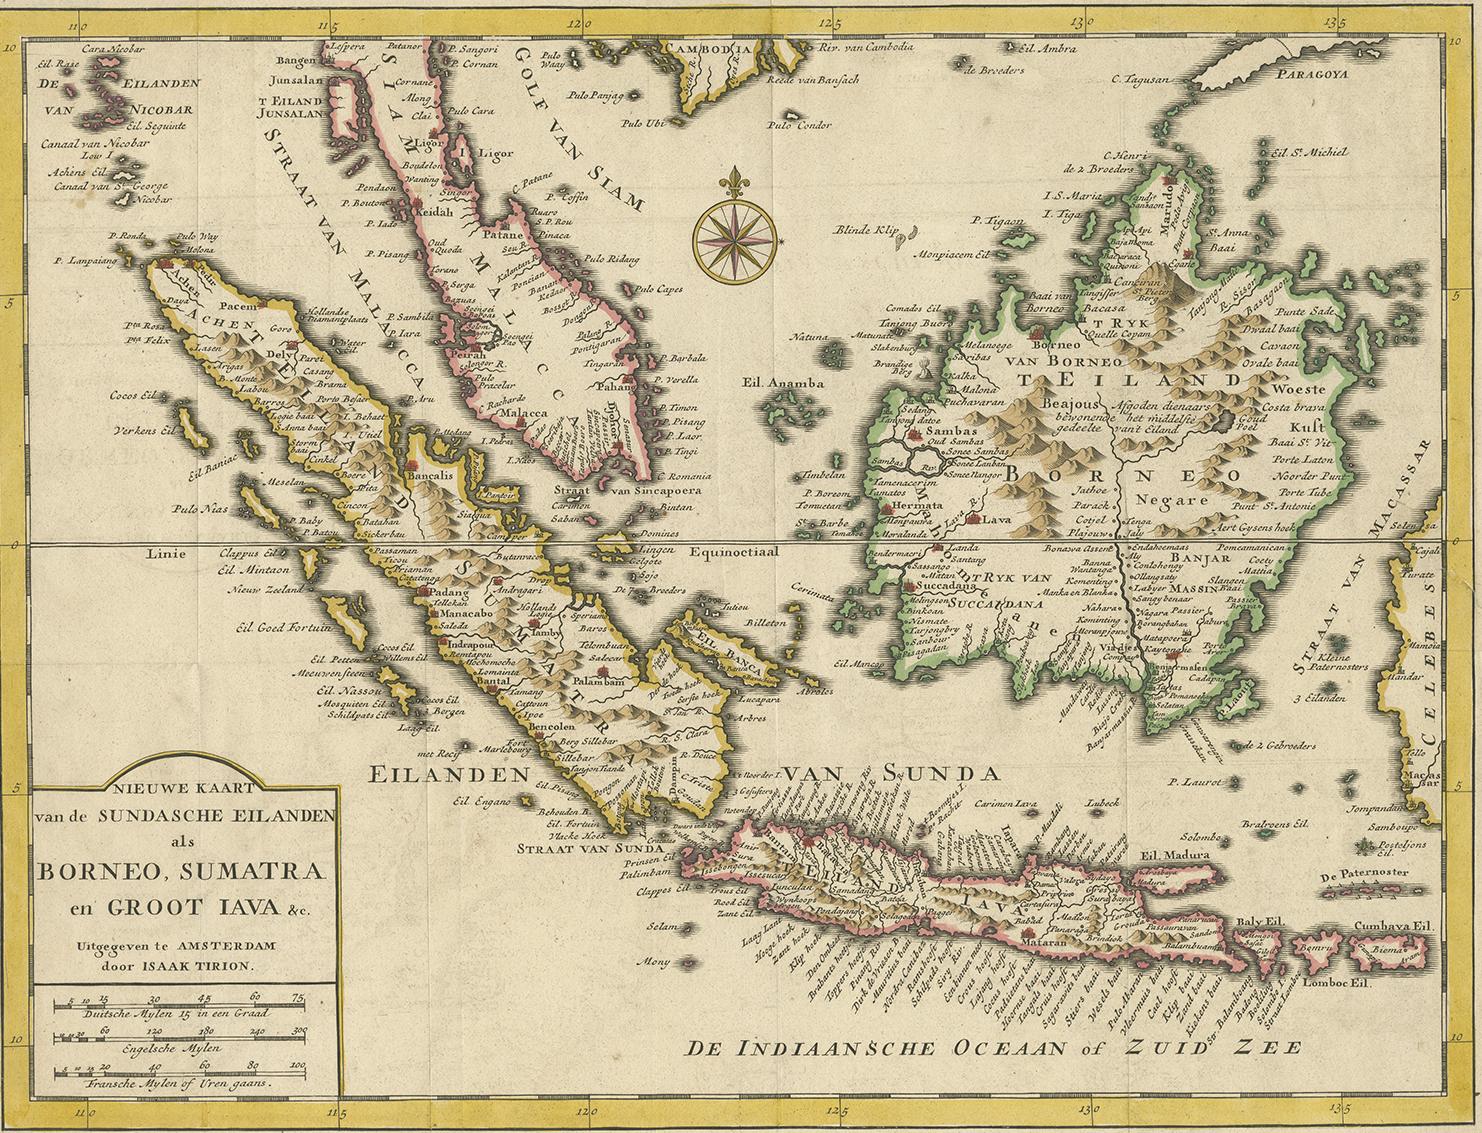 Antique map titled 'Nieuwe kaart van de Sundasche Eilanden als Borneo, Sumatra en Groot Iava & c'. Detailed map of the Sunda Islands, Southeast Asia, extending from the tip of Cambodia to Java. This map originates from: 'Hedendaagsche Historie, of